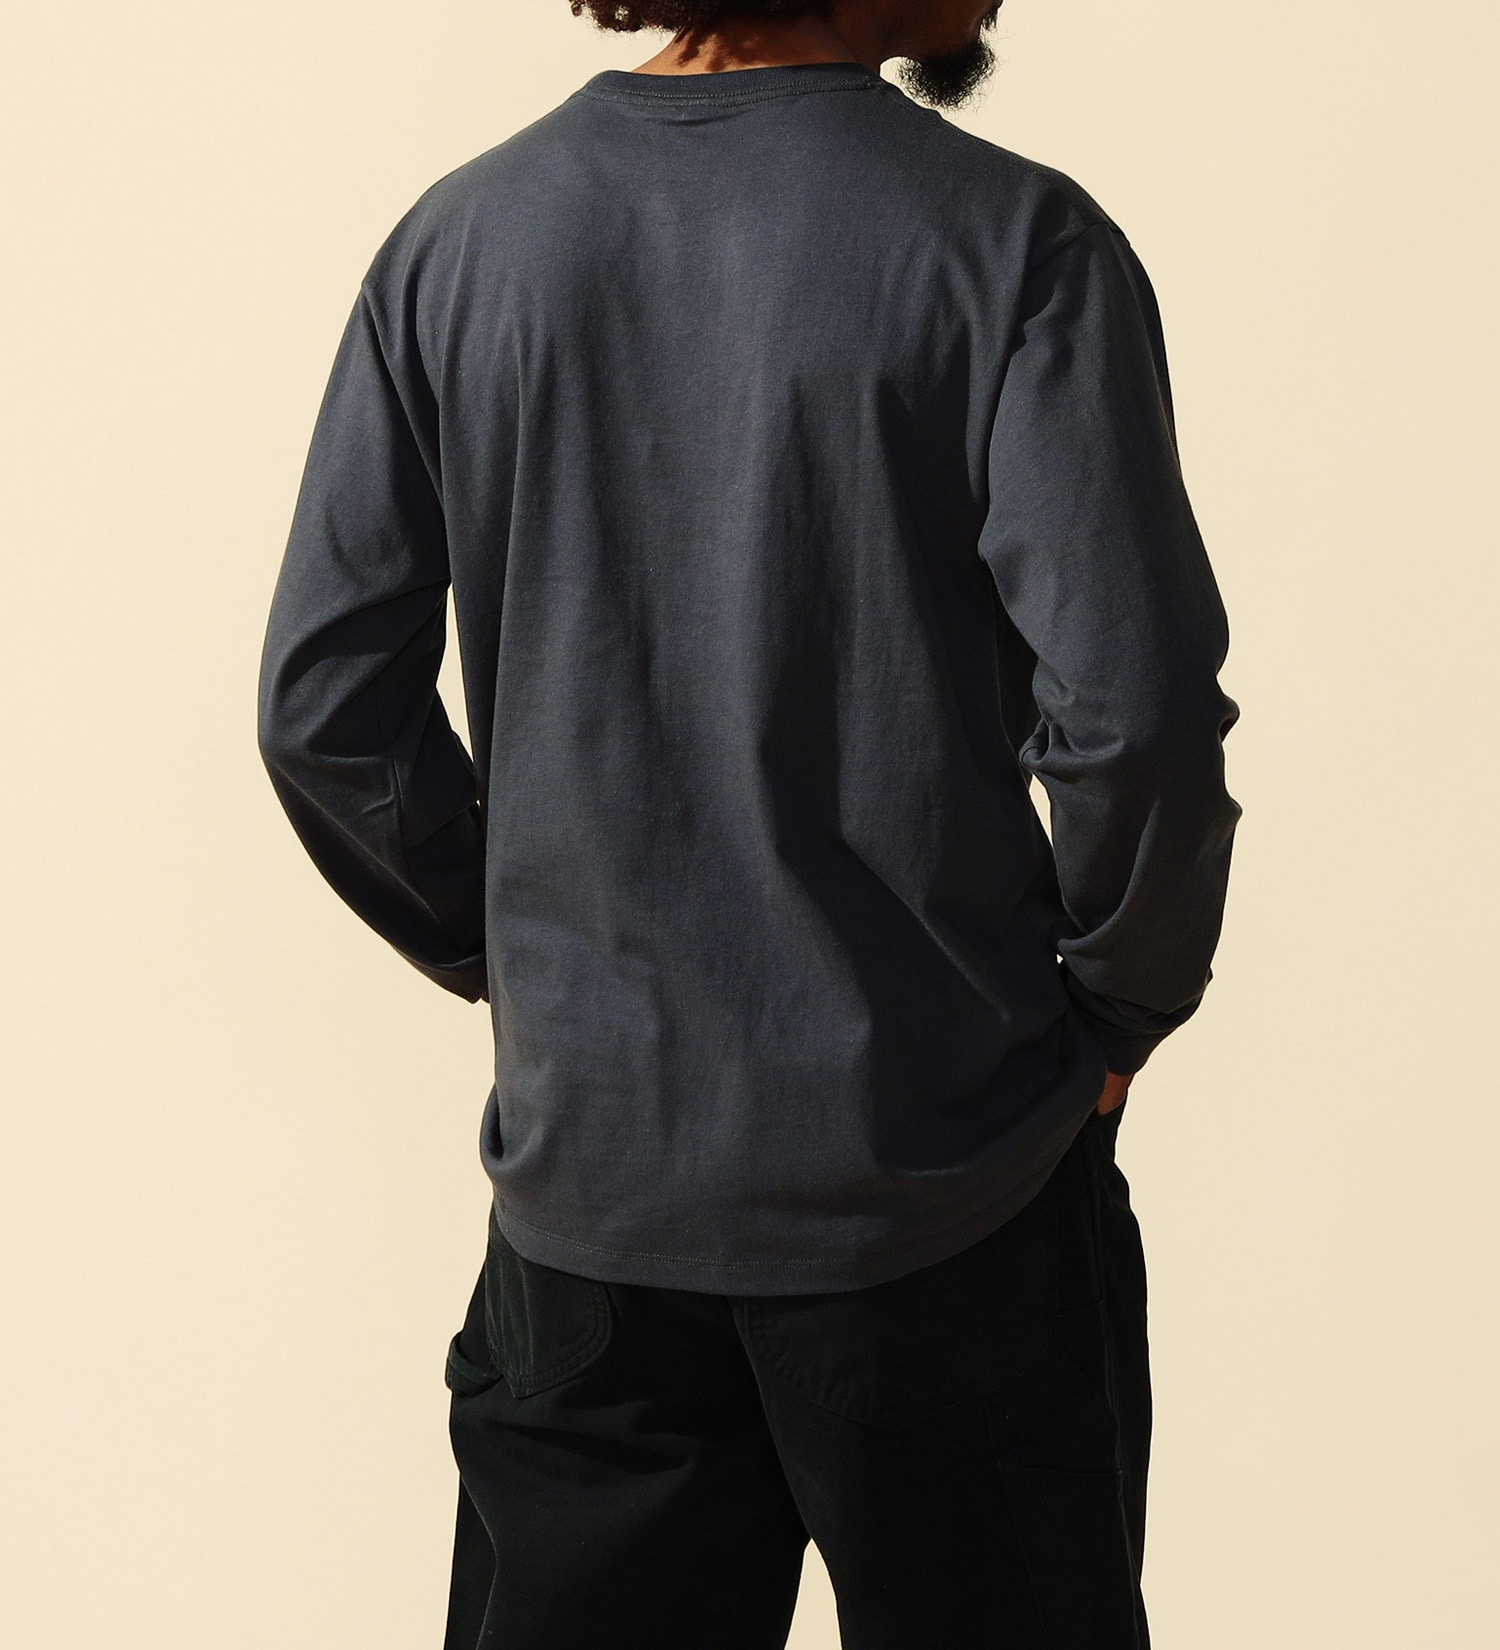 Lee(リー)の【GW SALE】Lee刺繍 ポケット ロングスリーブTee|トップス/Tシャツ/カットソー/メンズ|チャコールグレー